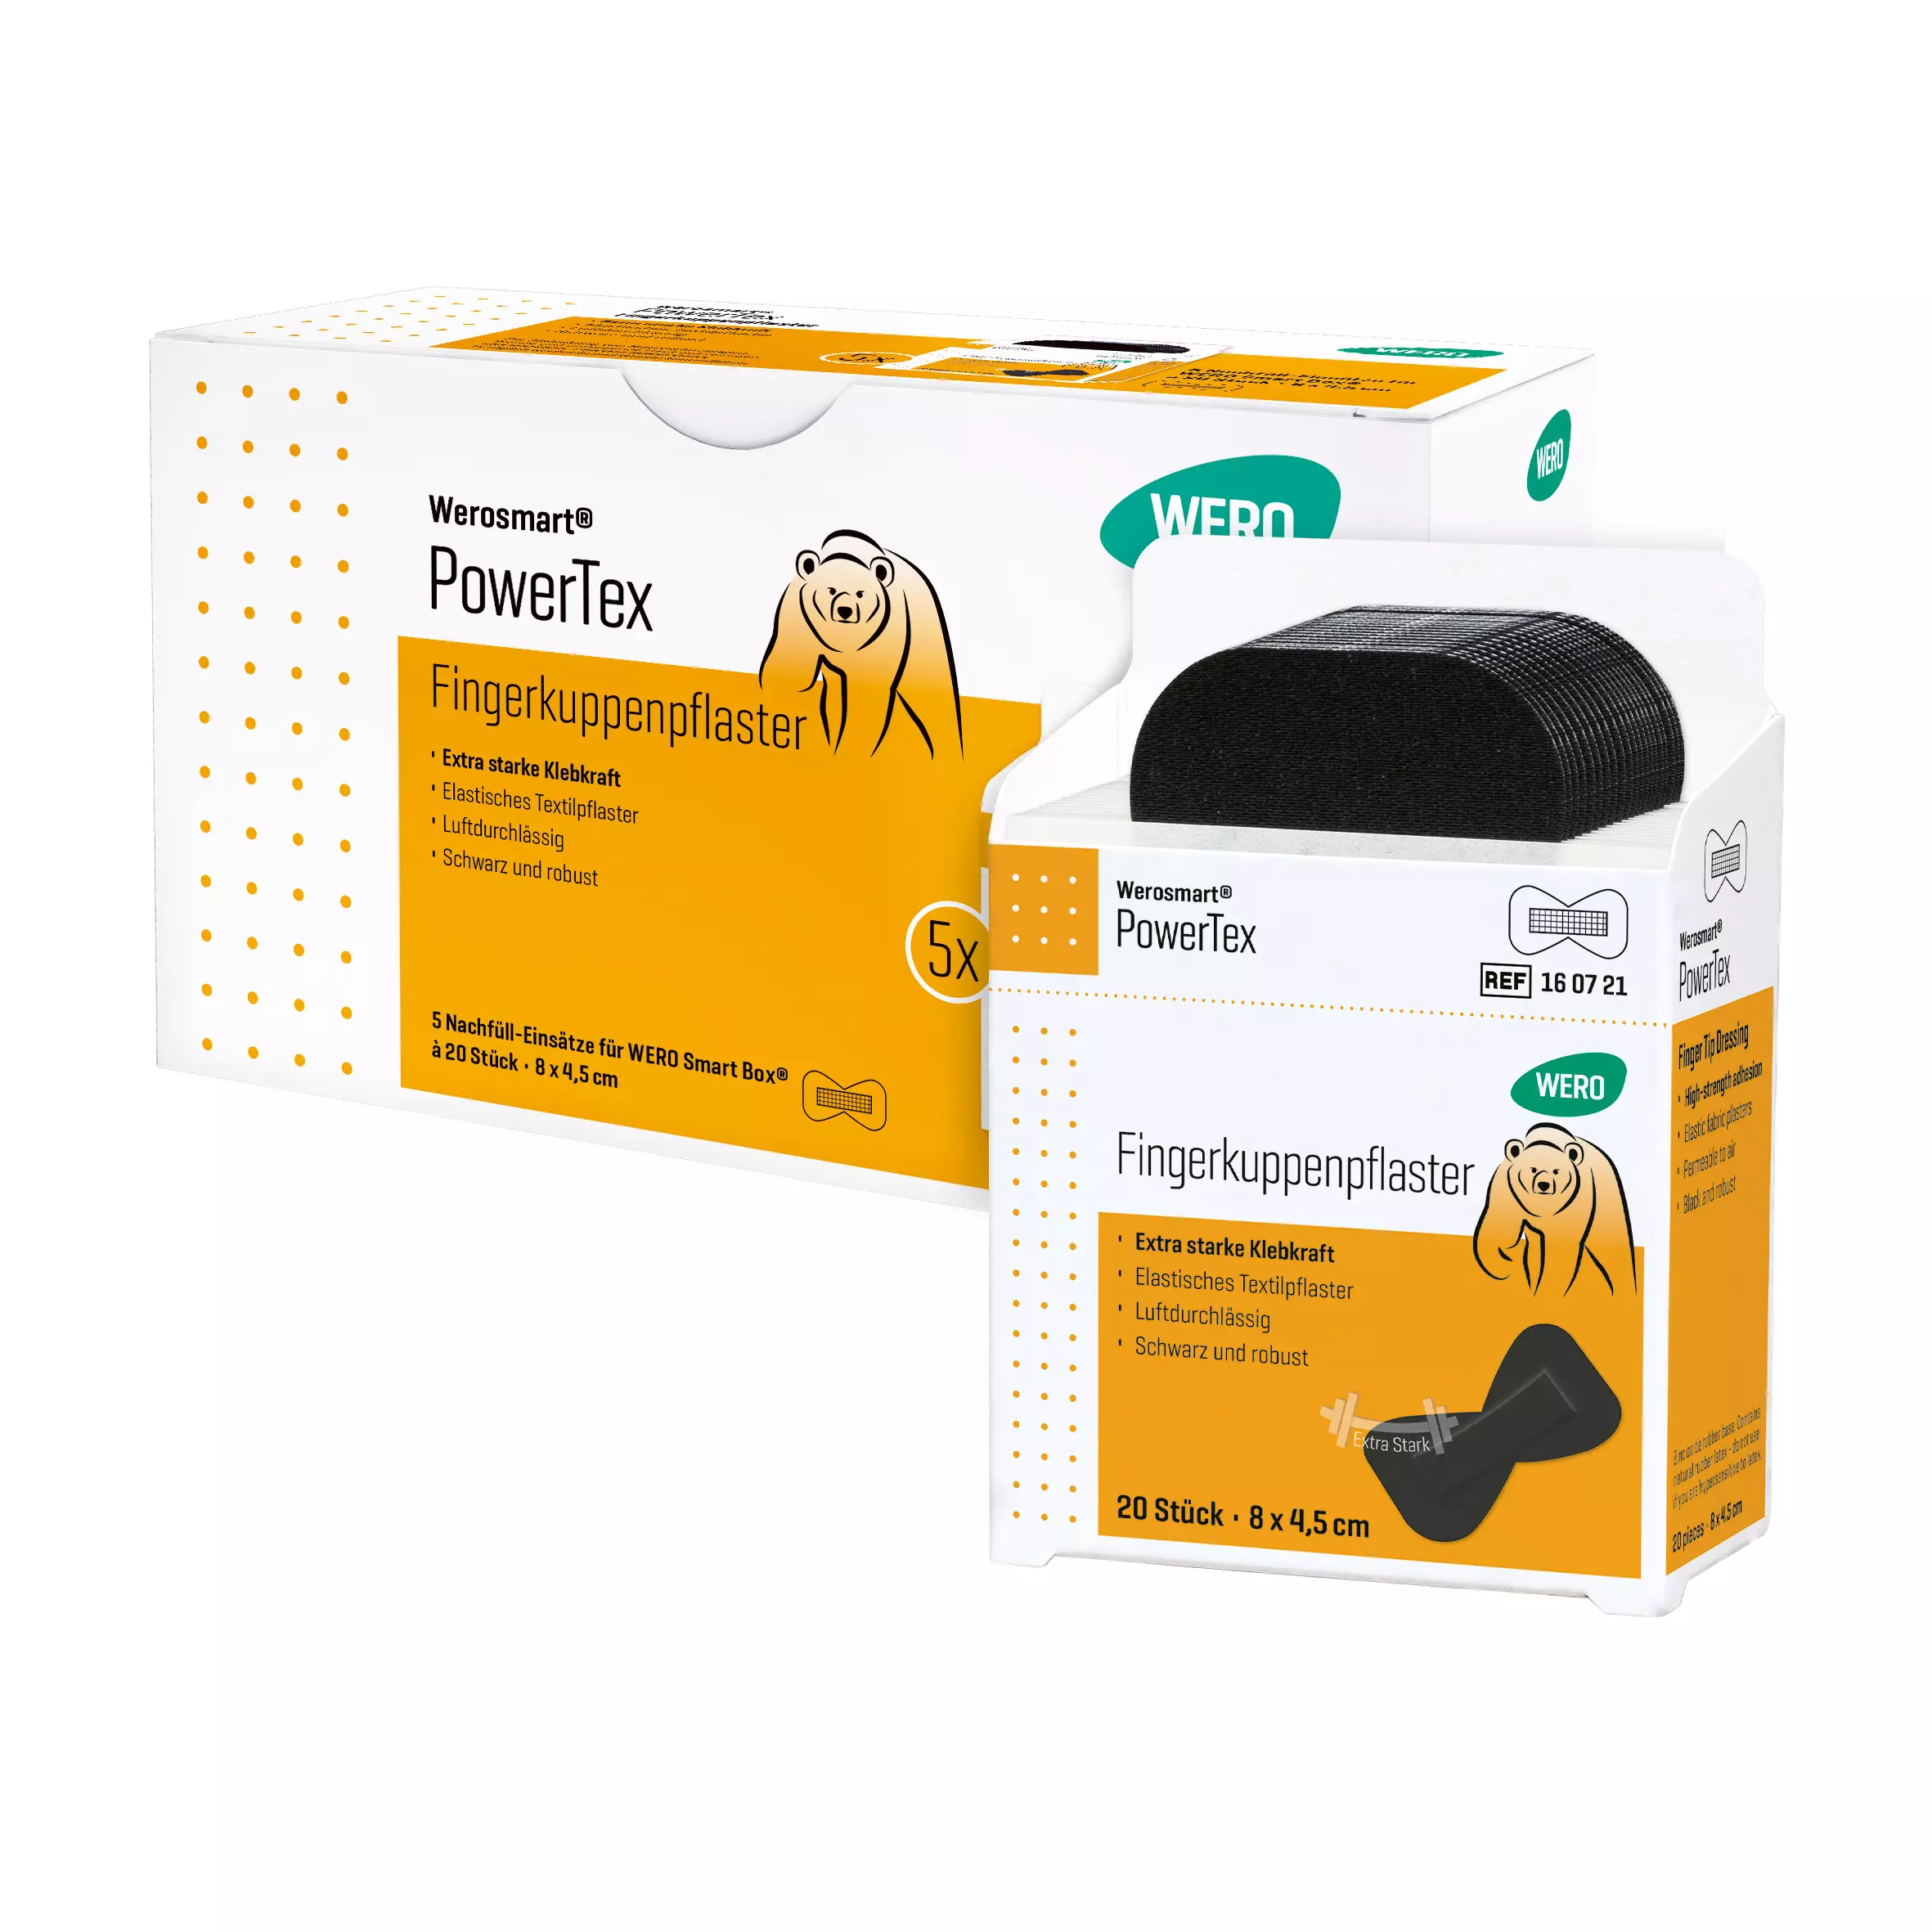 Werosmart® PowerTex plaster dispenser inserts fingertip plasters - 8 cm, 5 inserts